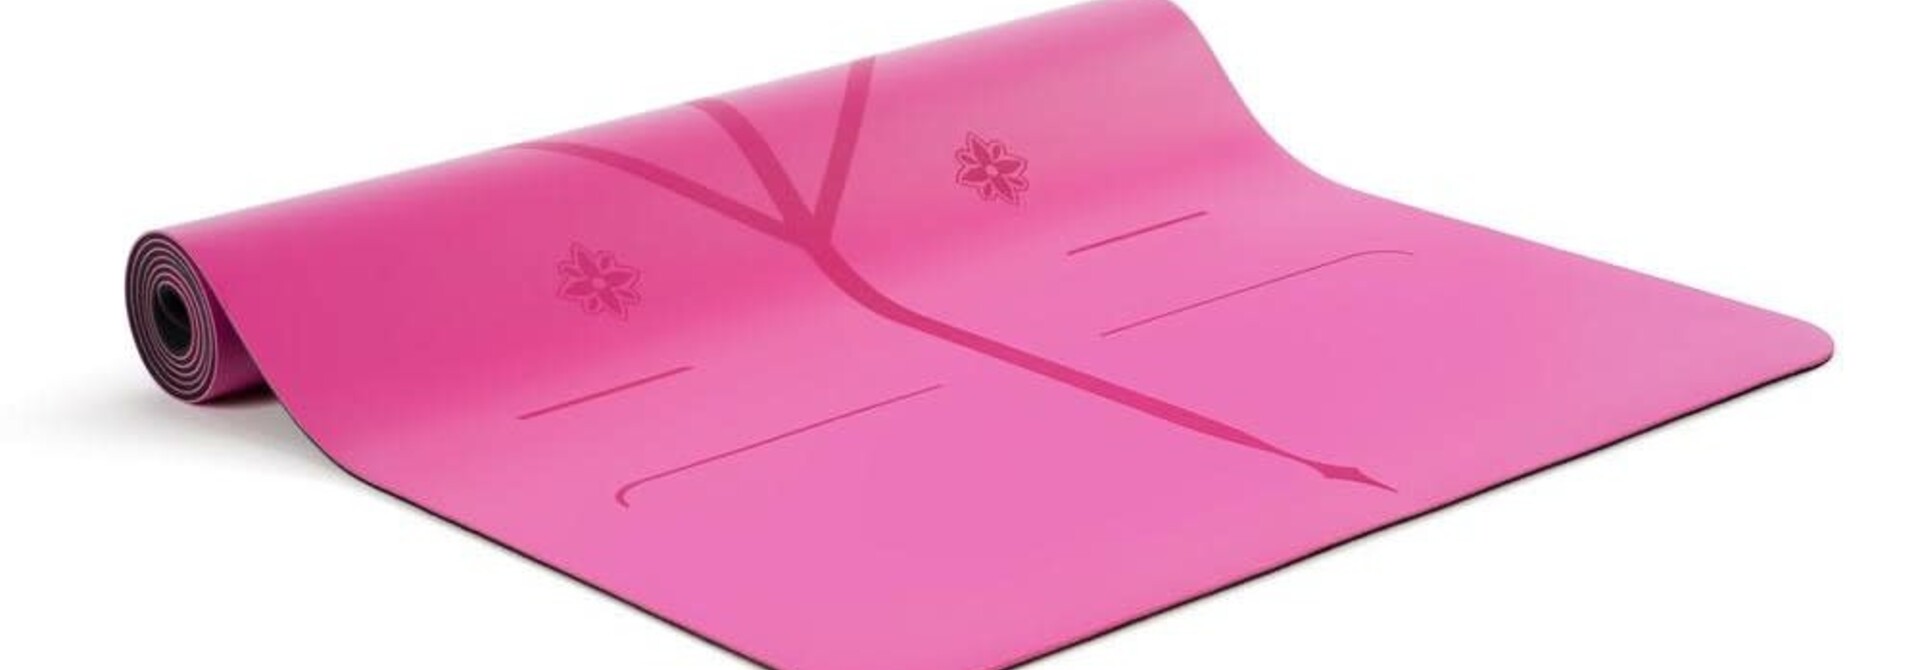 Liforme Gratitude Reise Yogamatte 180cm 66cm 2mm - Grateful Pink